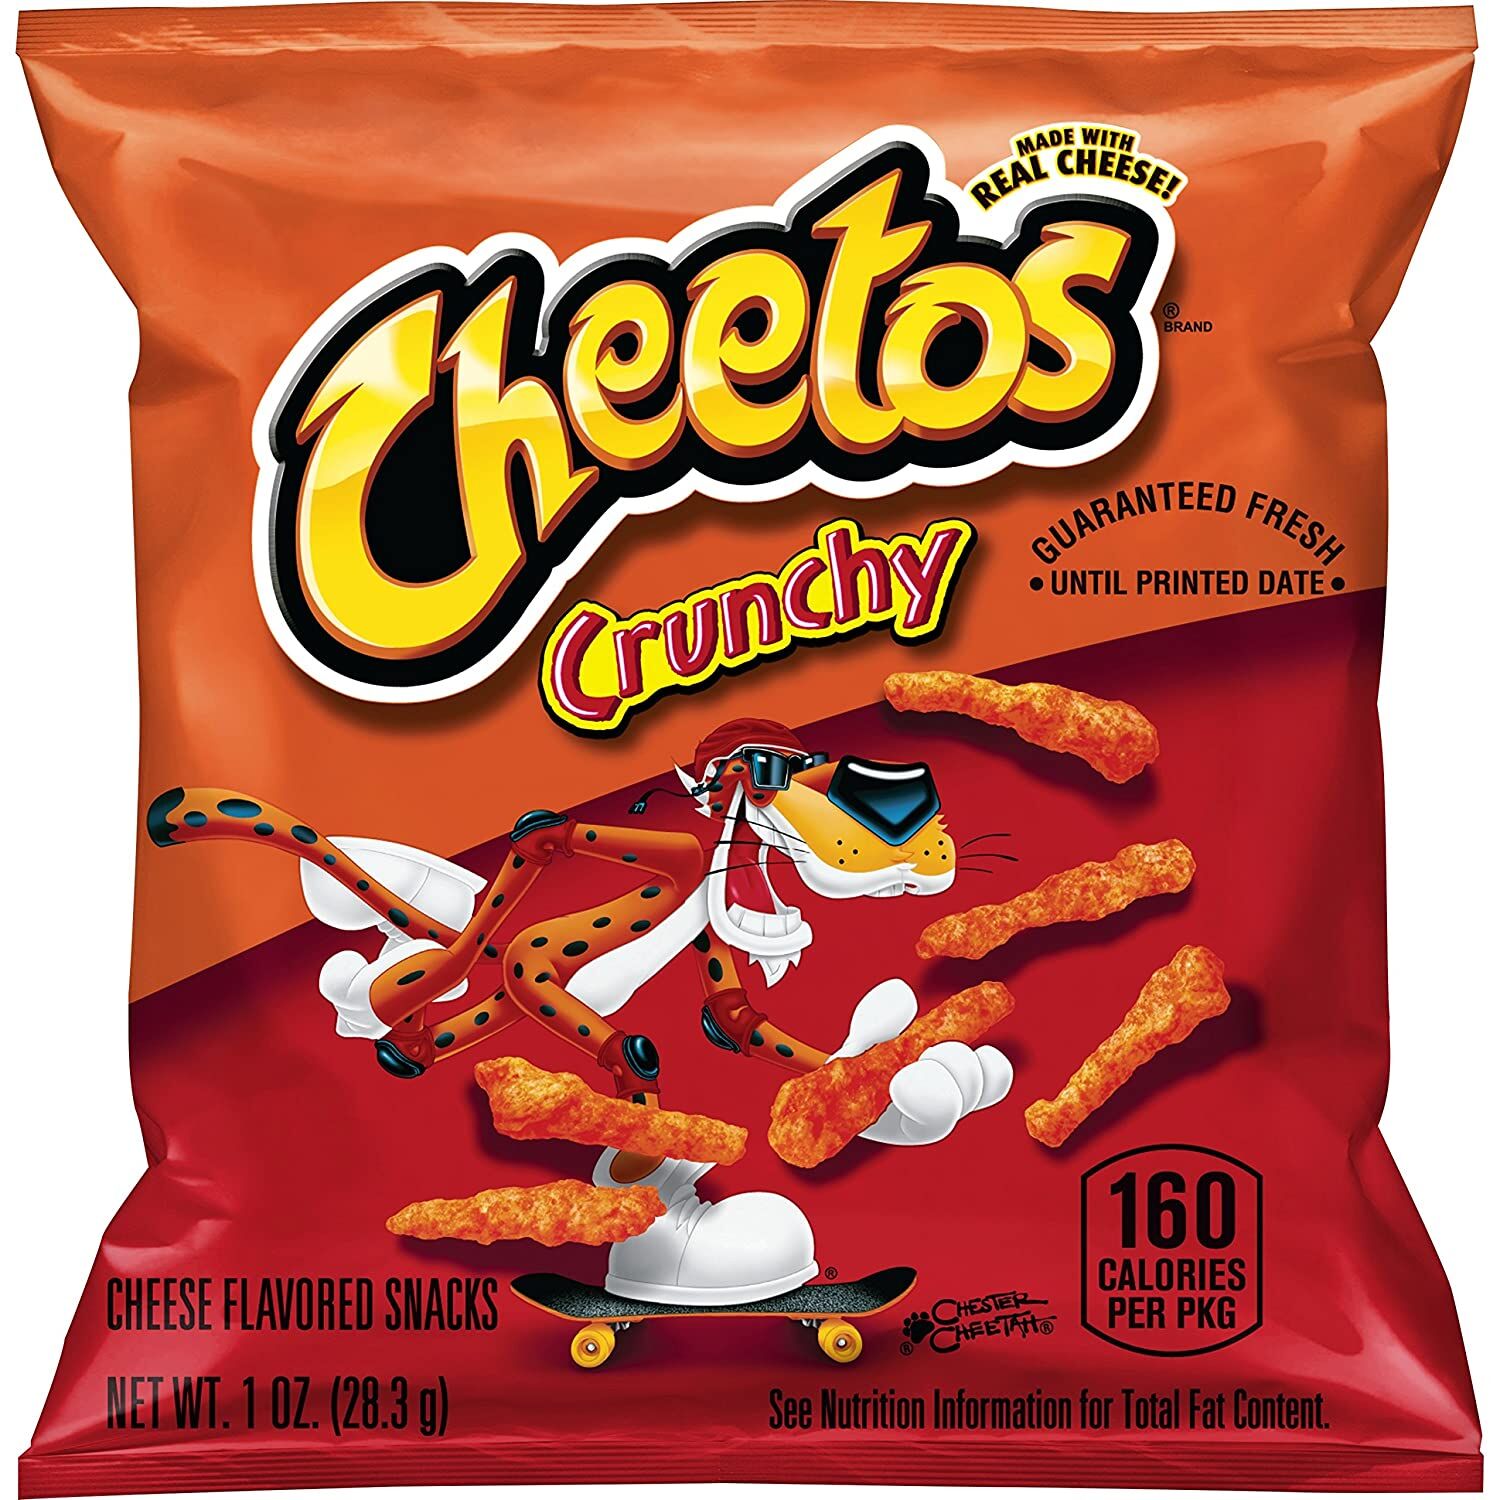 Spicy-Sweet Popcorn Snacks : Cheetos Flamin' Hot Cinnamon Sugar